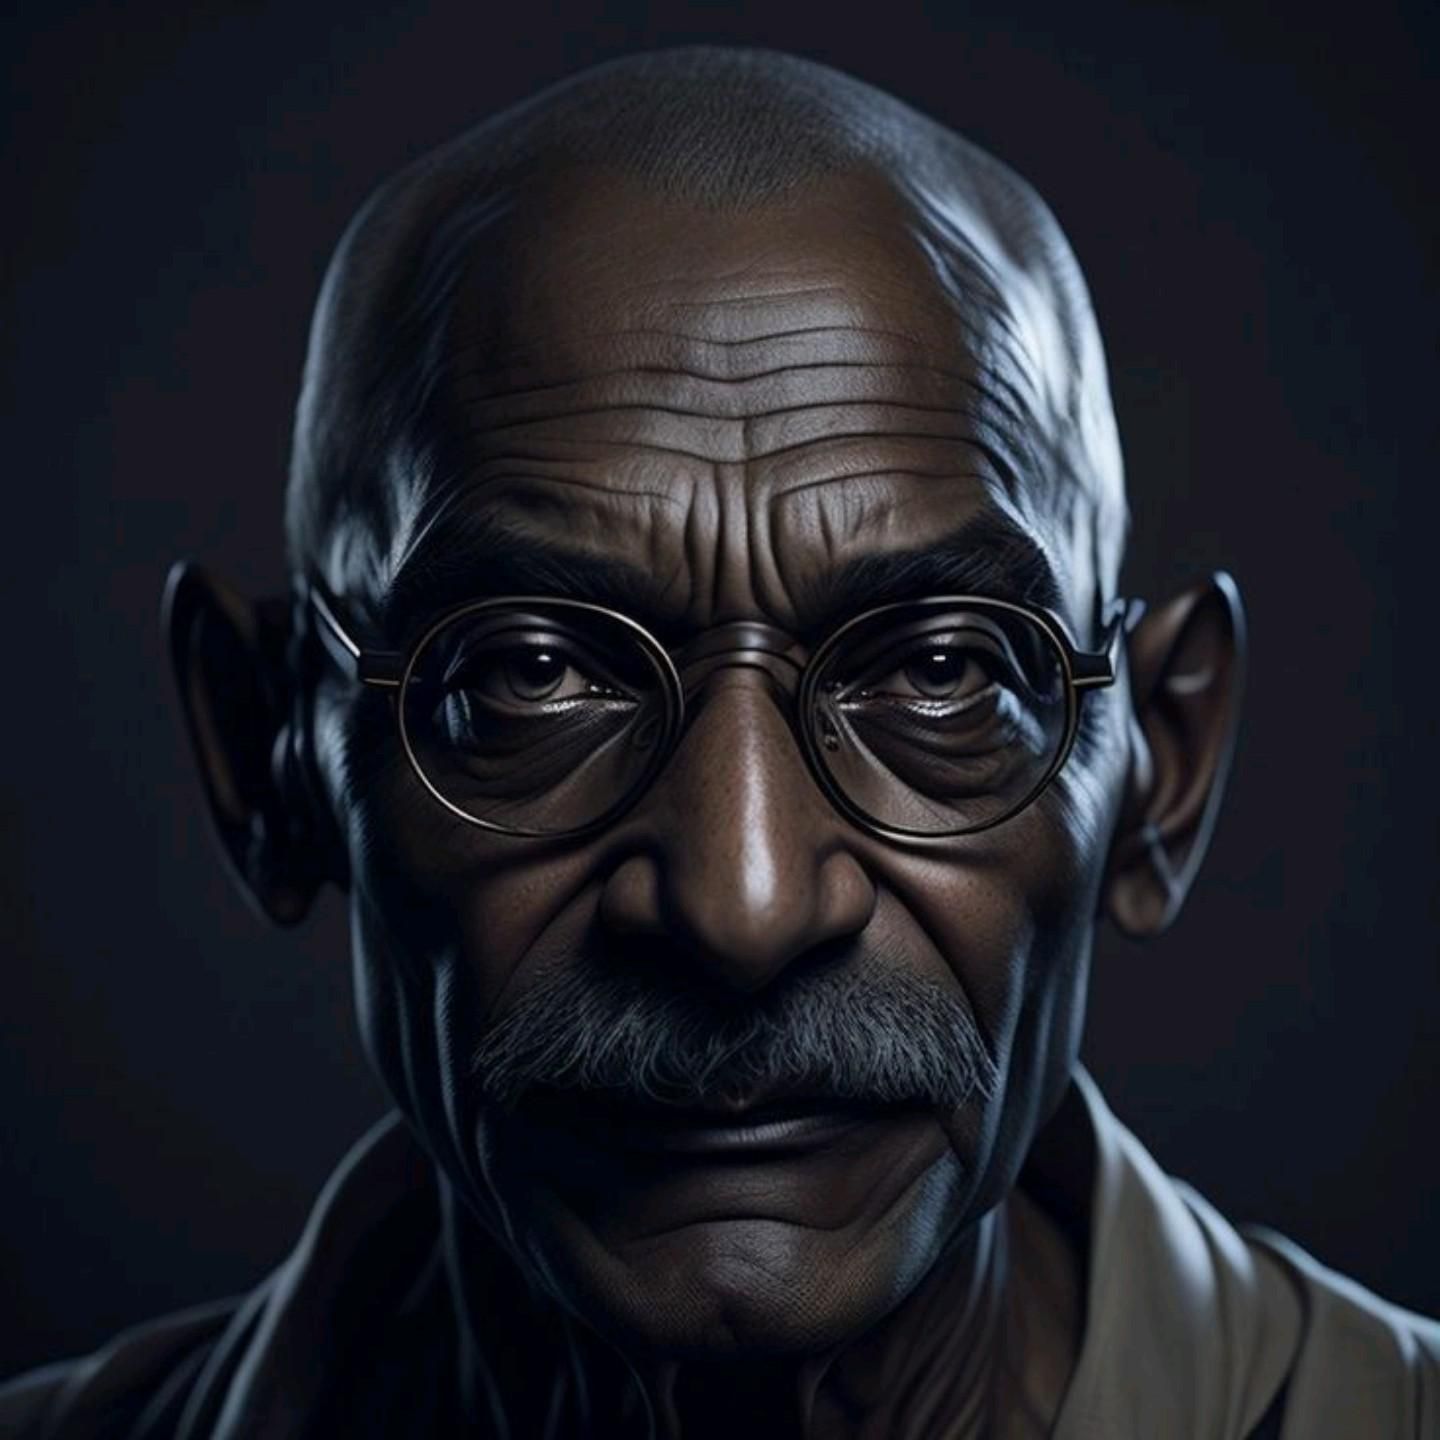 Mahatma Gandhi Image Generated from AI! #funart